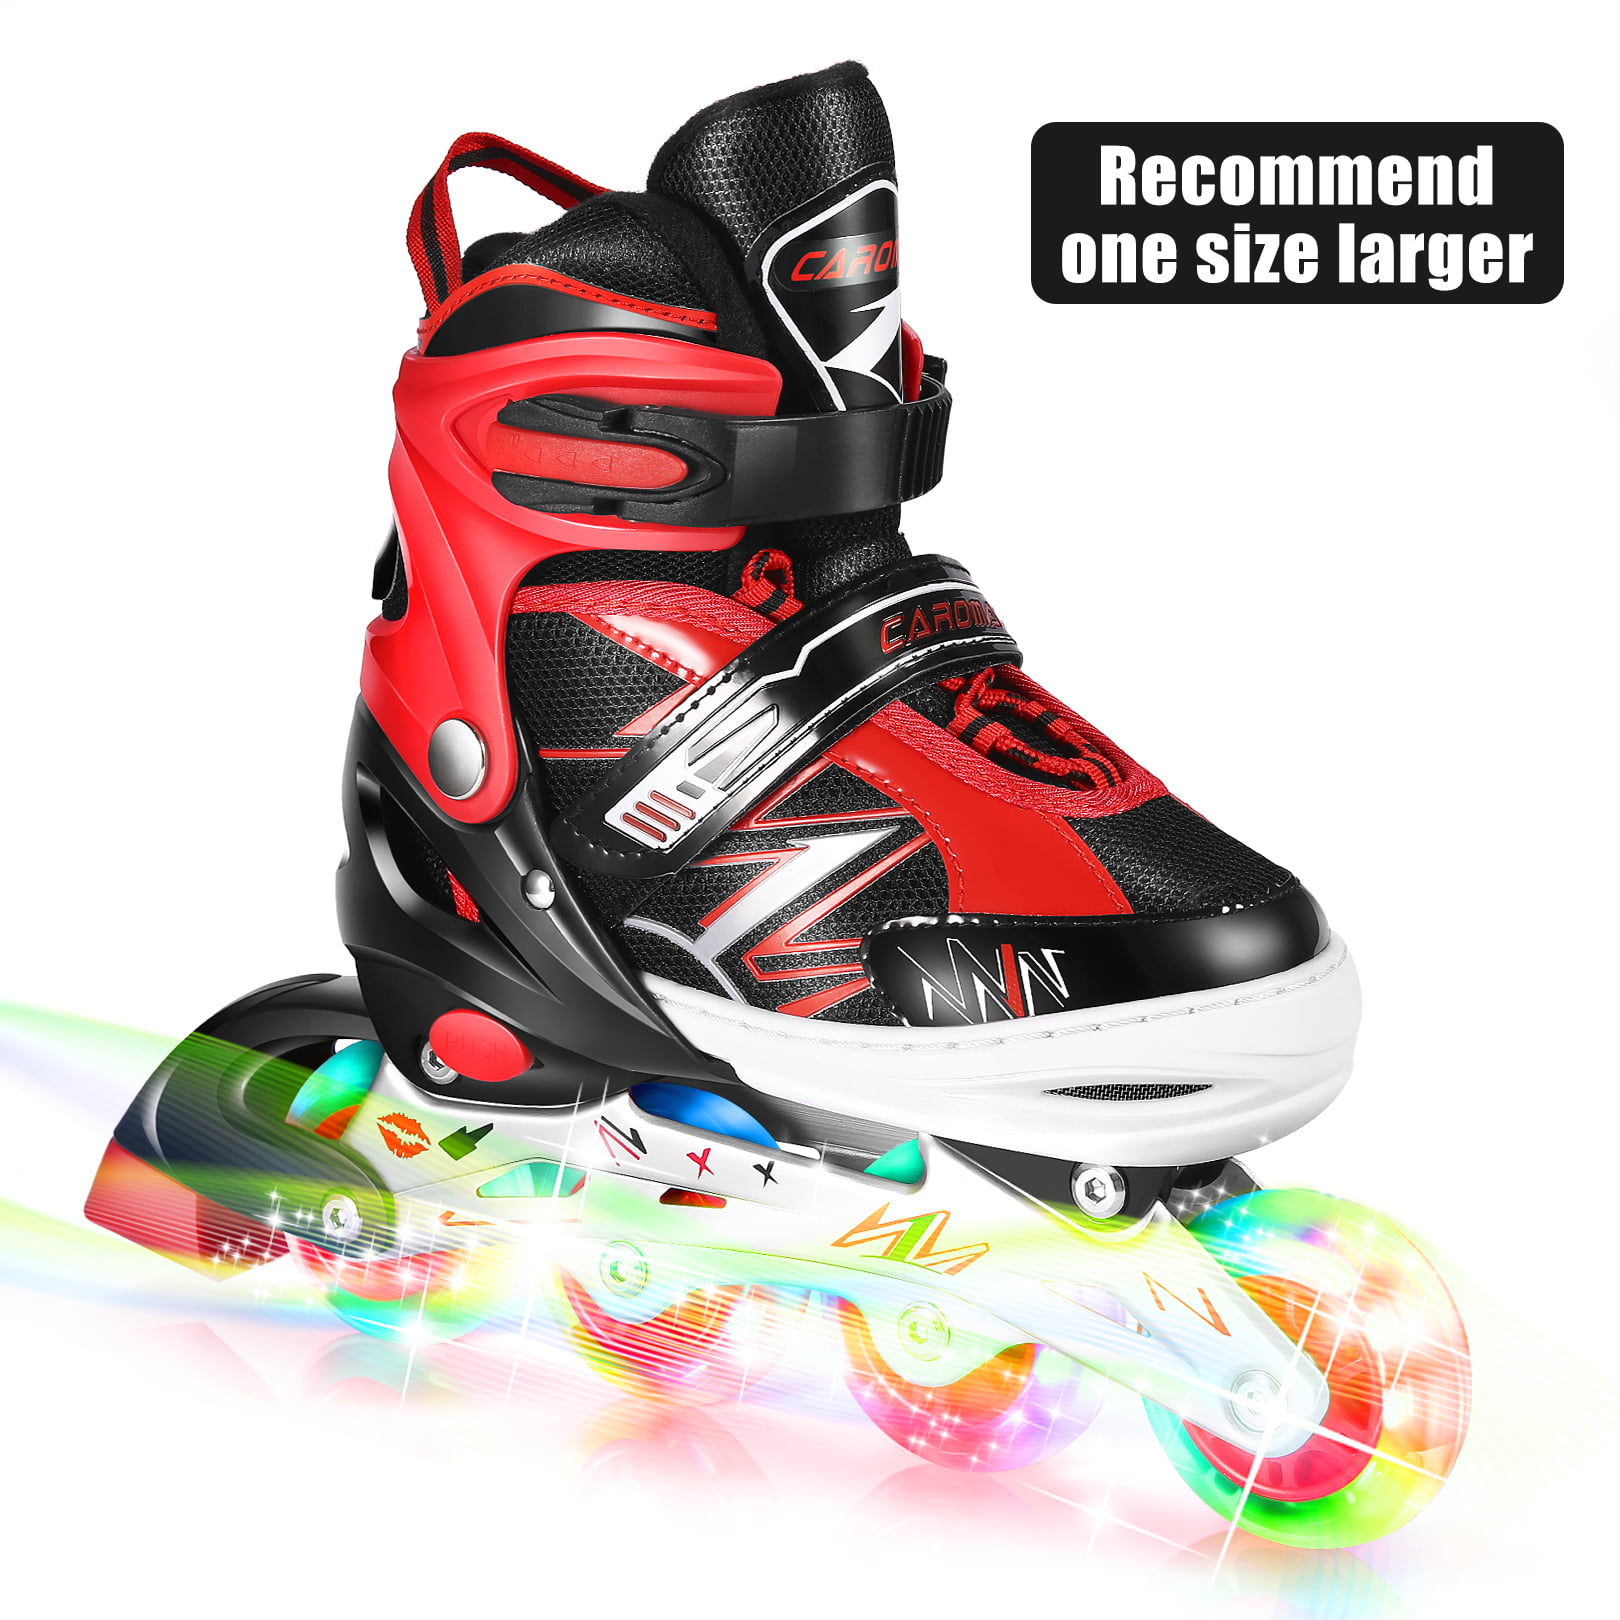 2-in-1 Quad Skate Adjustable Roller Skates for Girls & Boys Beginner Kids Rollerblades Fun Illuminating Roller Skates 